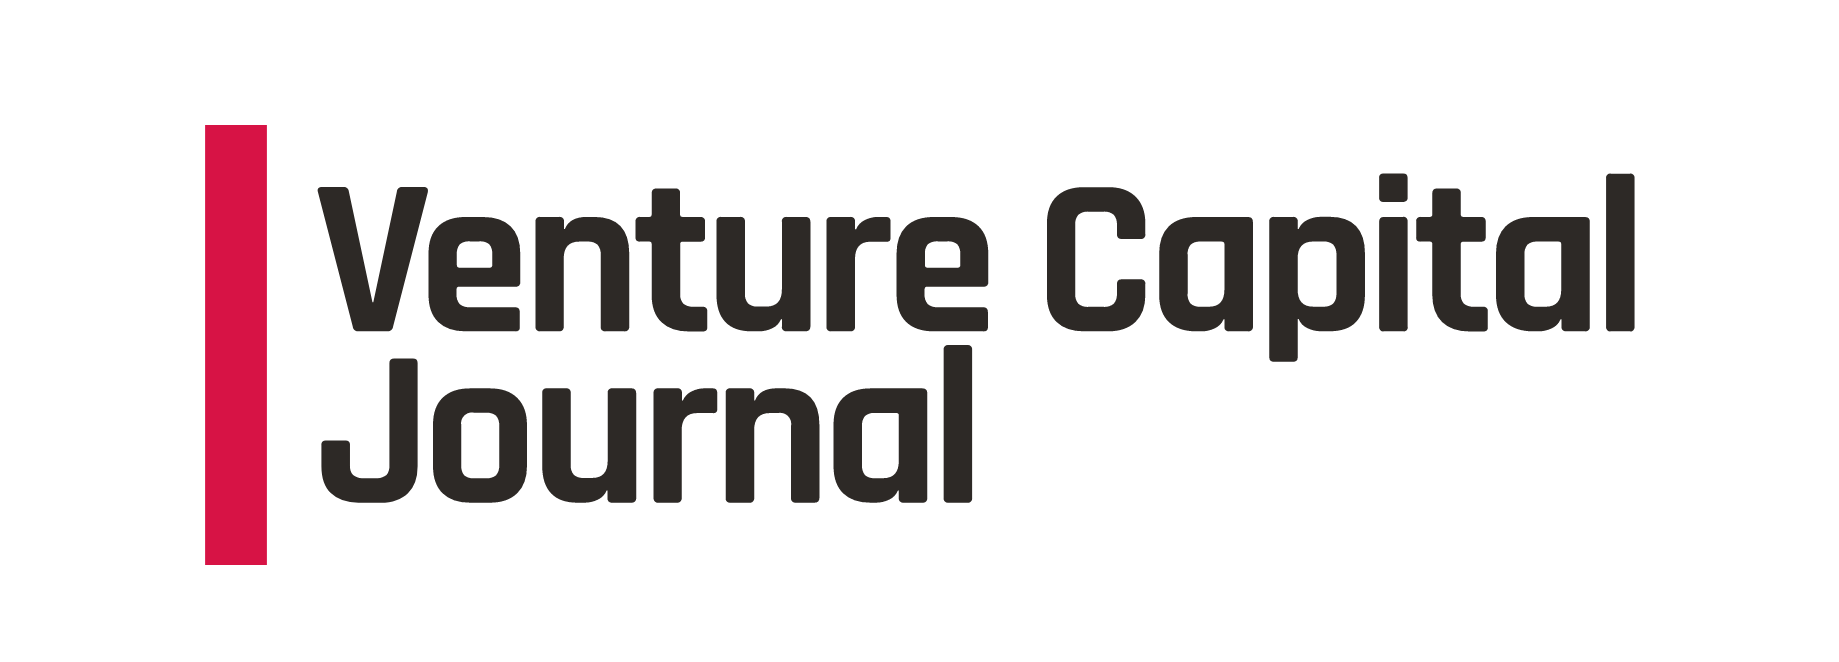 Venture Journal Captial | GrowerIQ